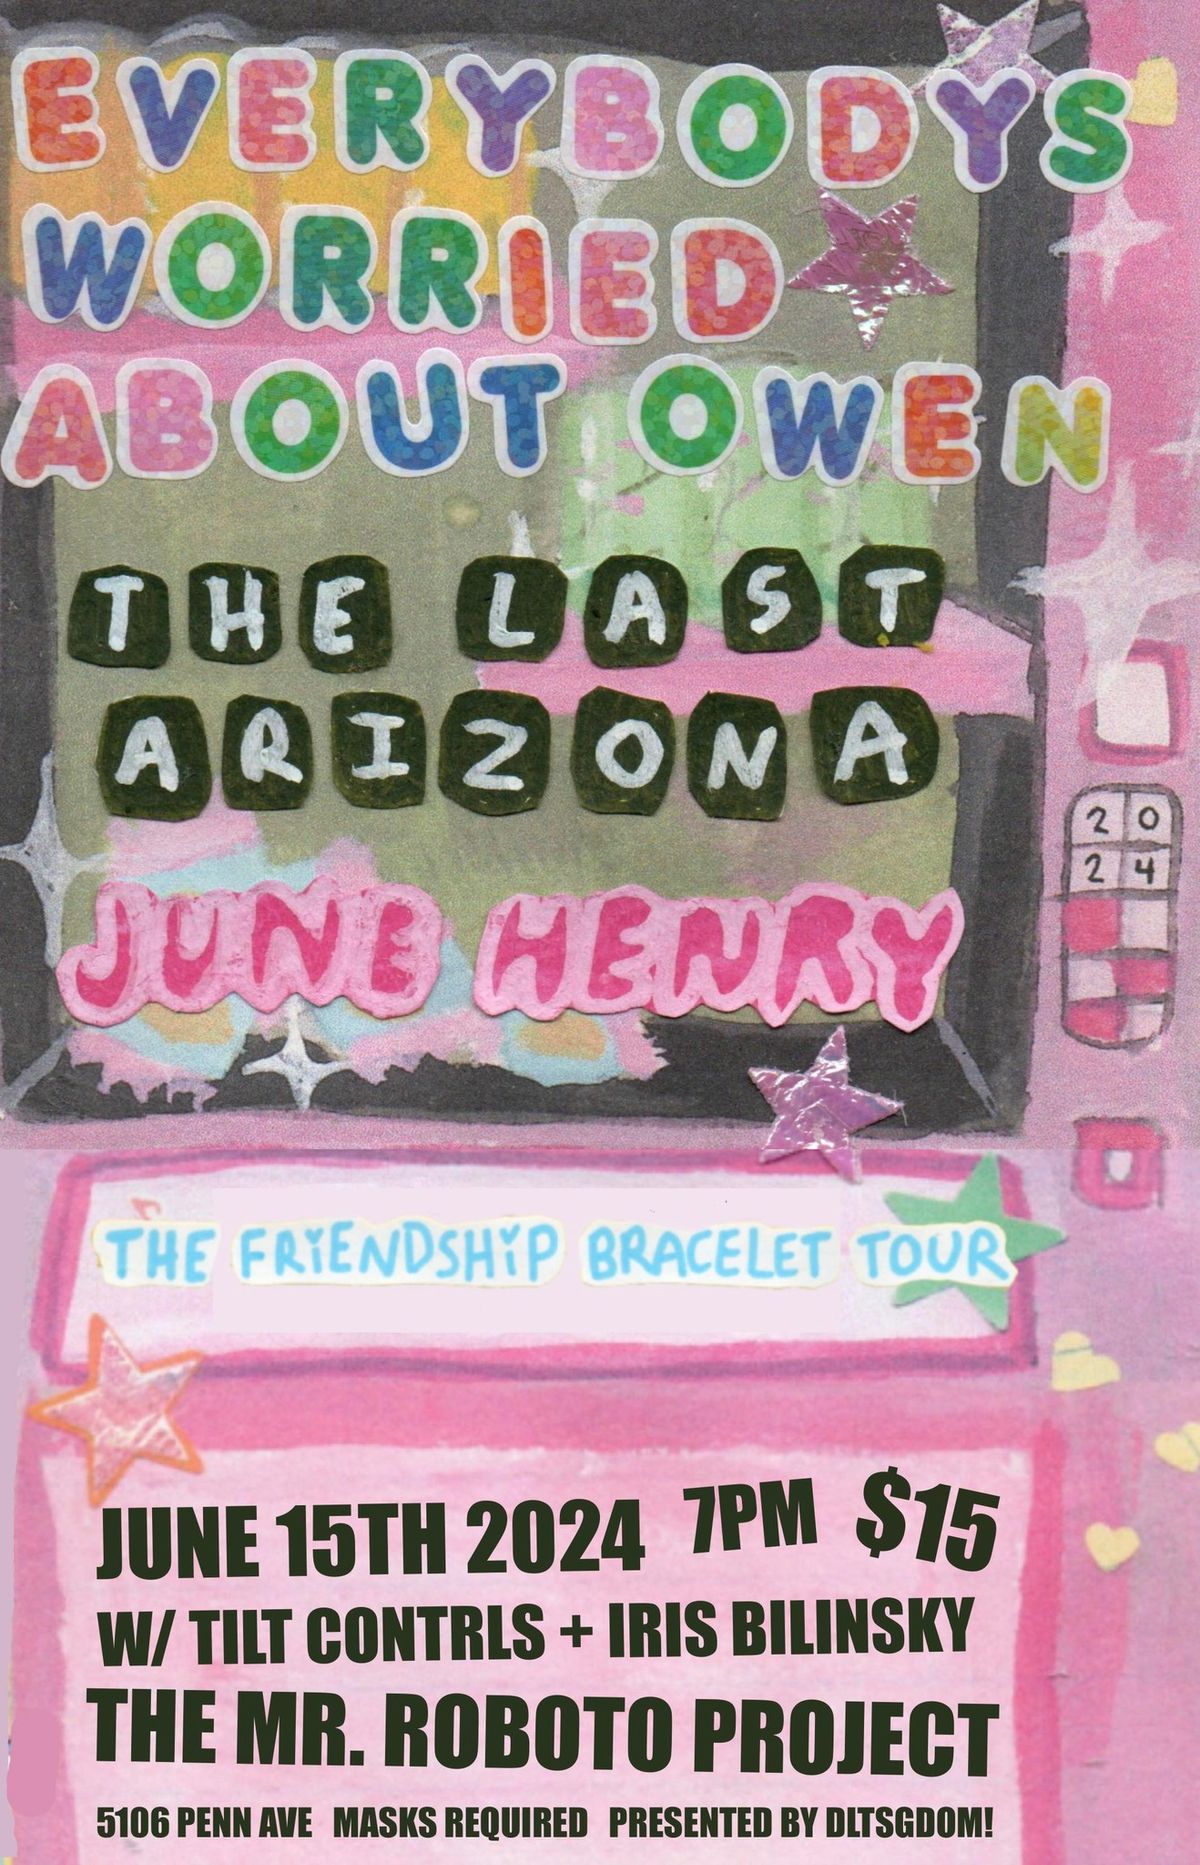 Everybody's Worried About Owen + The Last Arizona + June Henry w\/ Tilt Contrls + Iris Bilinsky